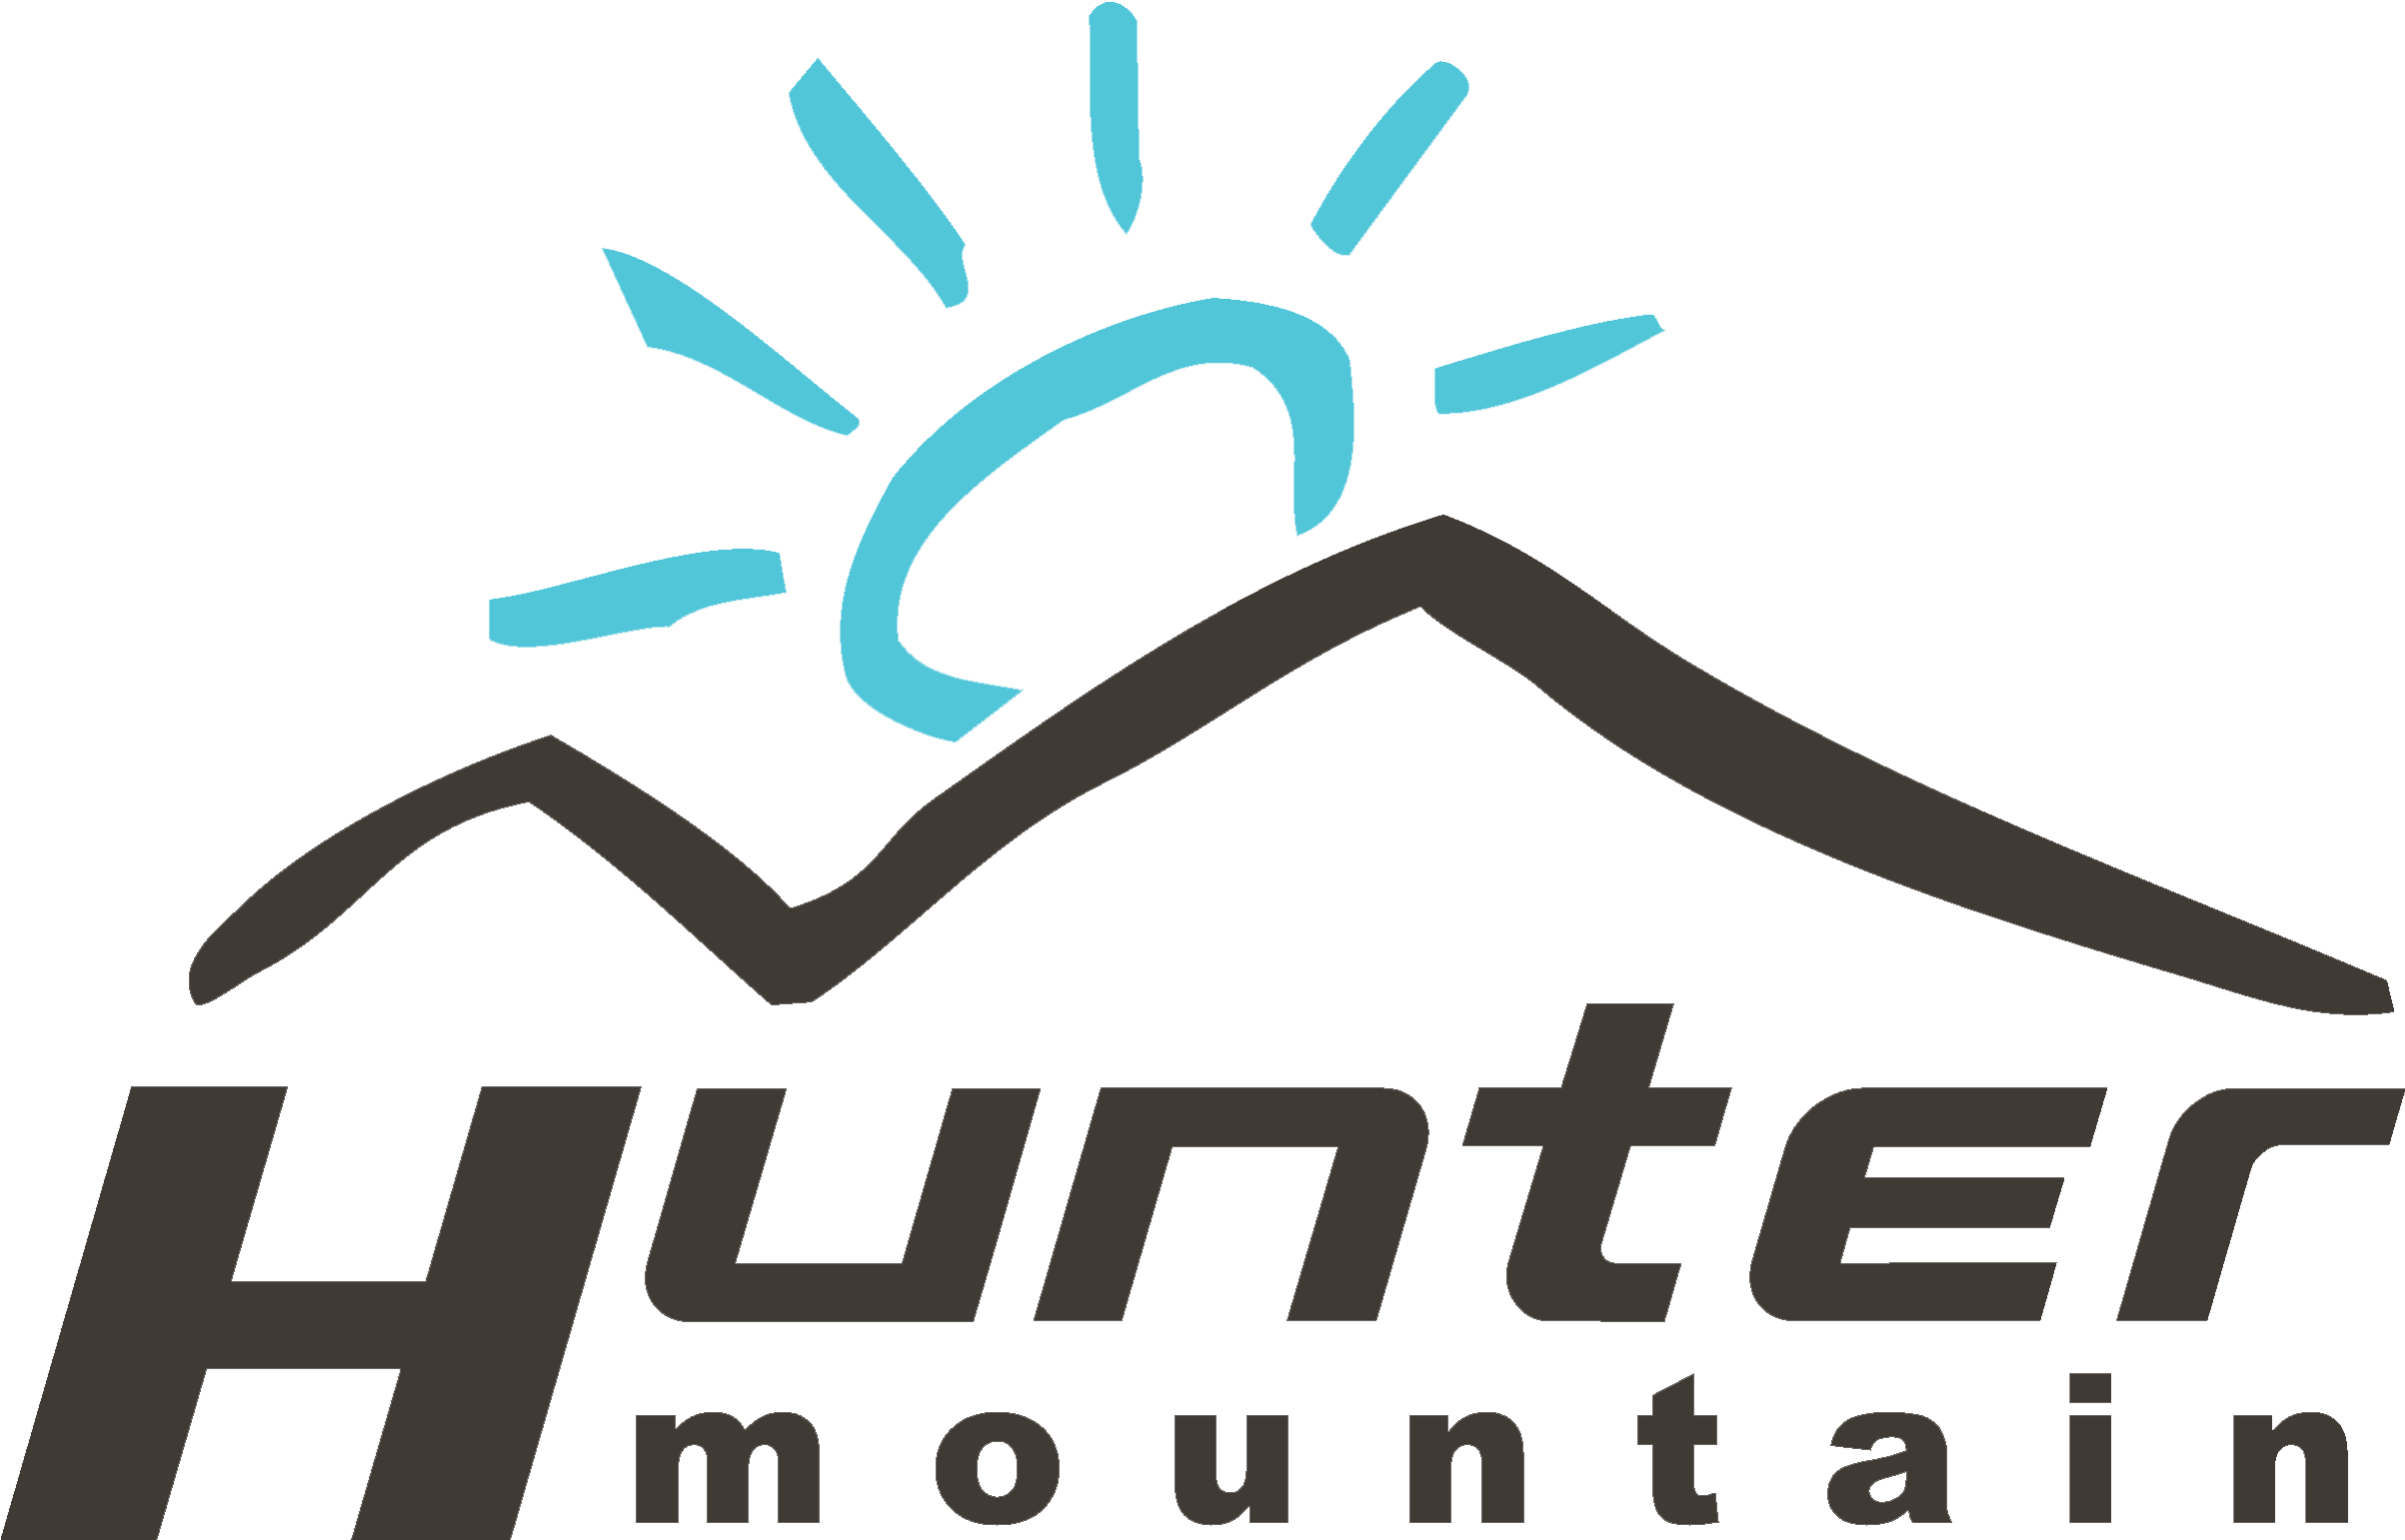 Hunter Mountain logo